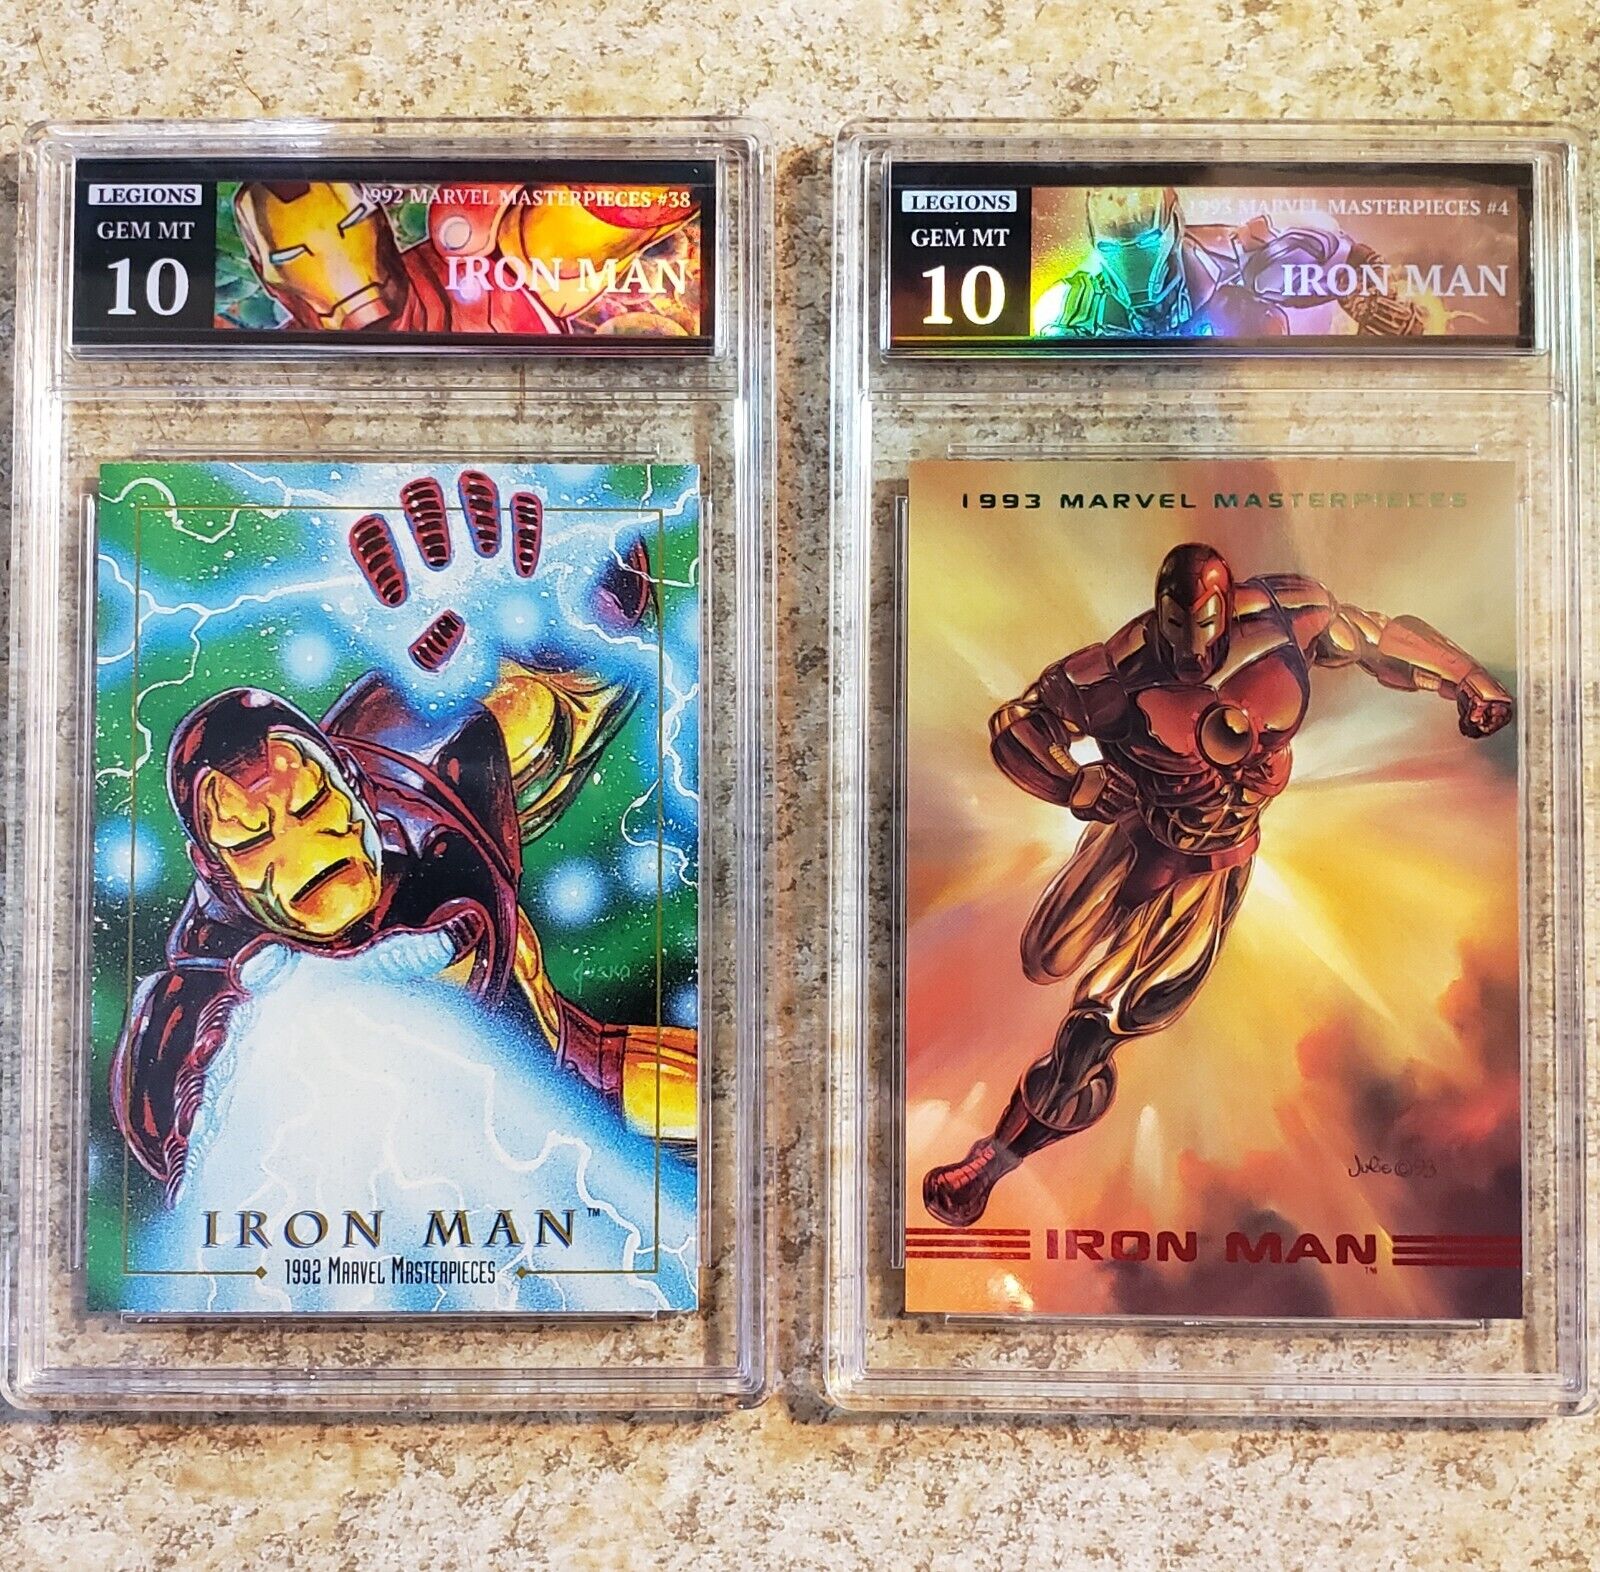 1992/93, Marvel Masterpieces, Ironman pair,  Legions 10 Gem Mint.